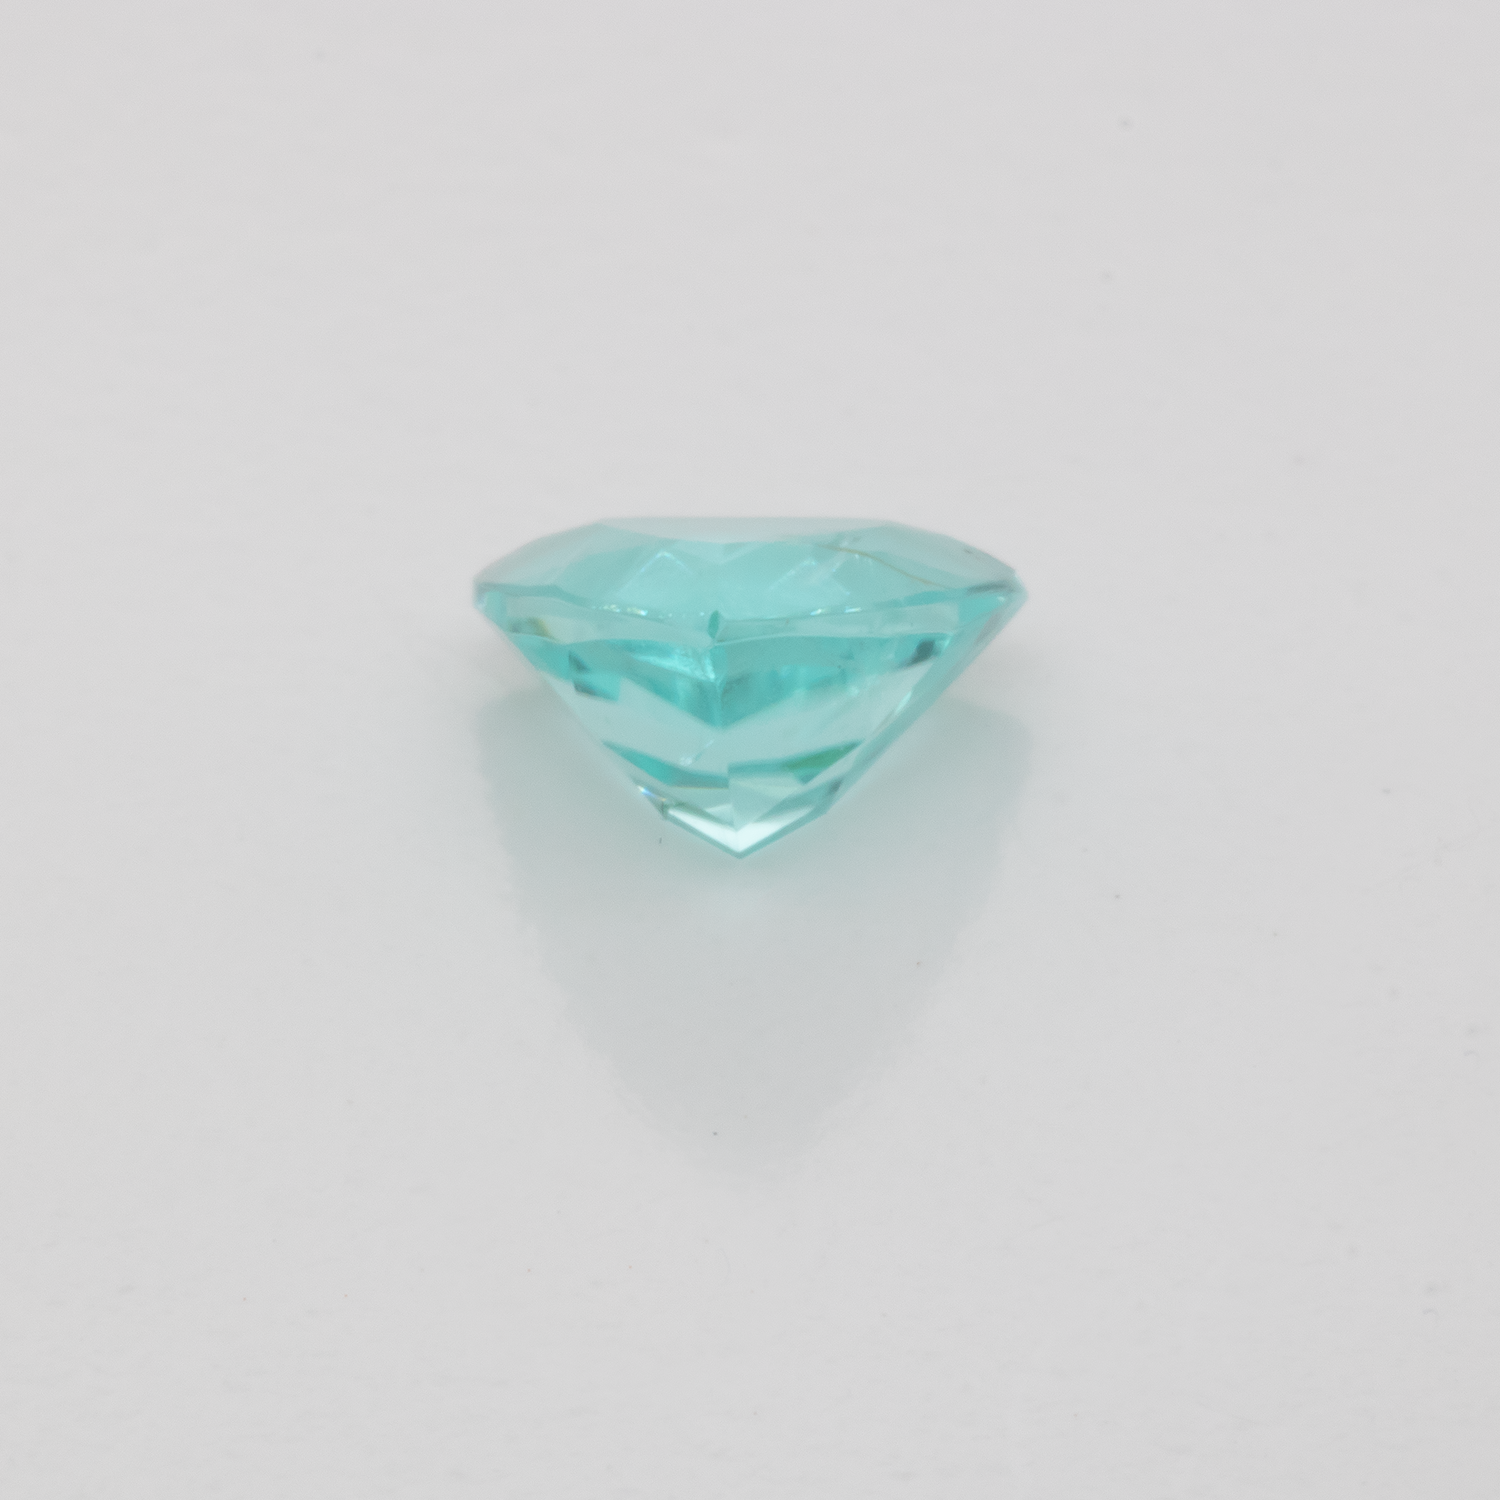 Paraiba Tourmaline - blue, trillion, 5x5.1 mm, 0.43 cts, No. PT90017